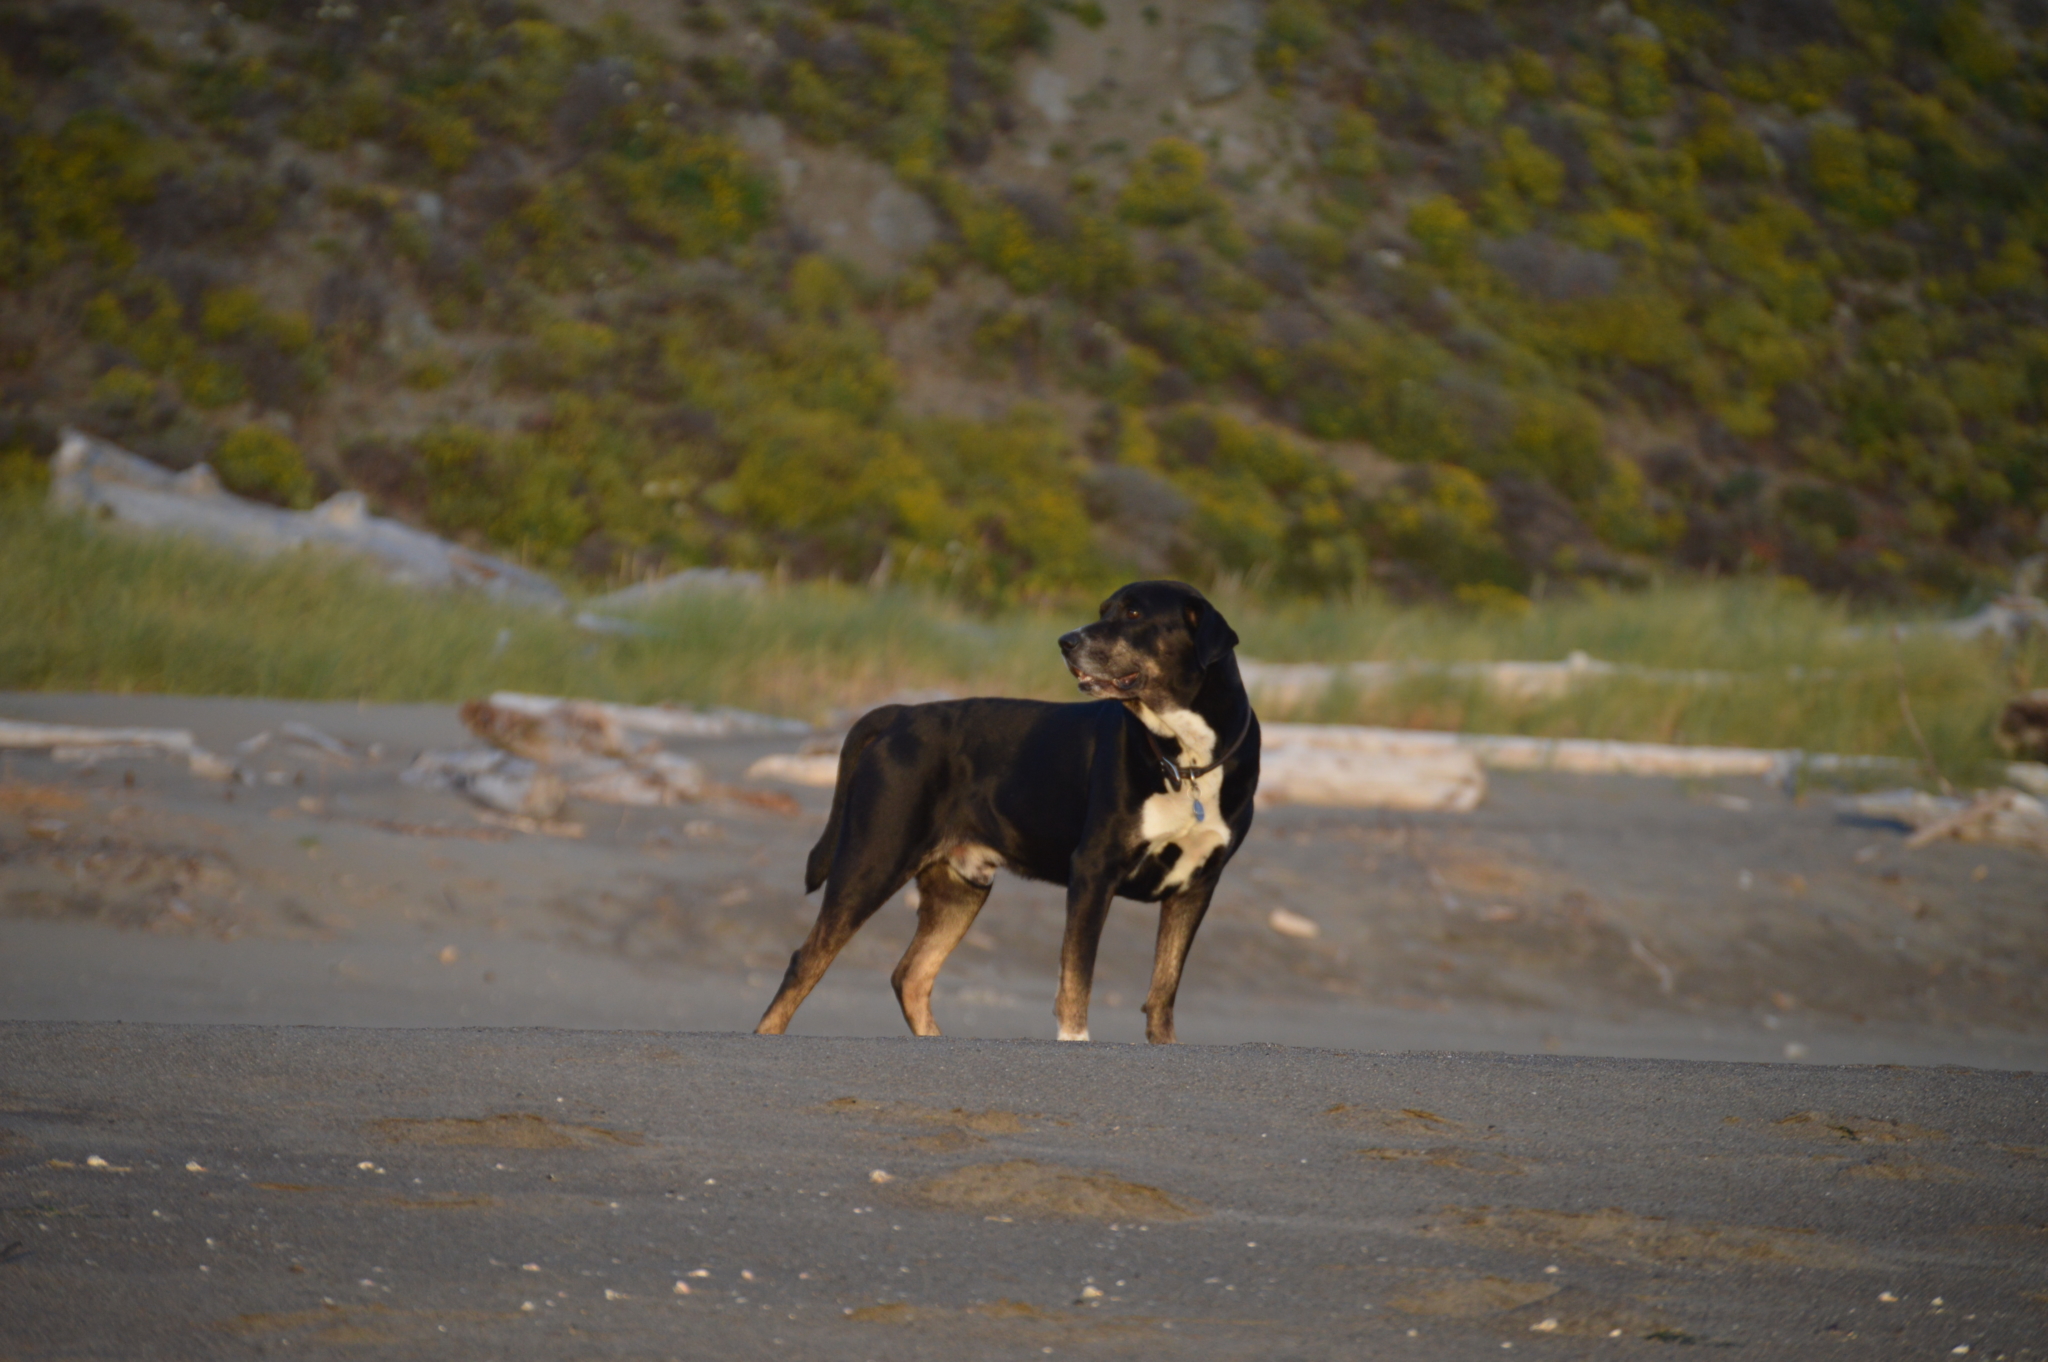 Dog standing on sandy beach in Northern California